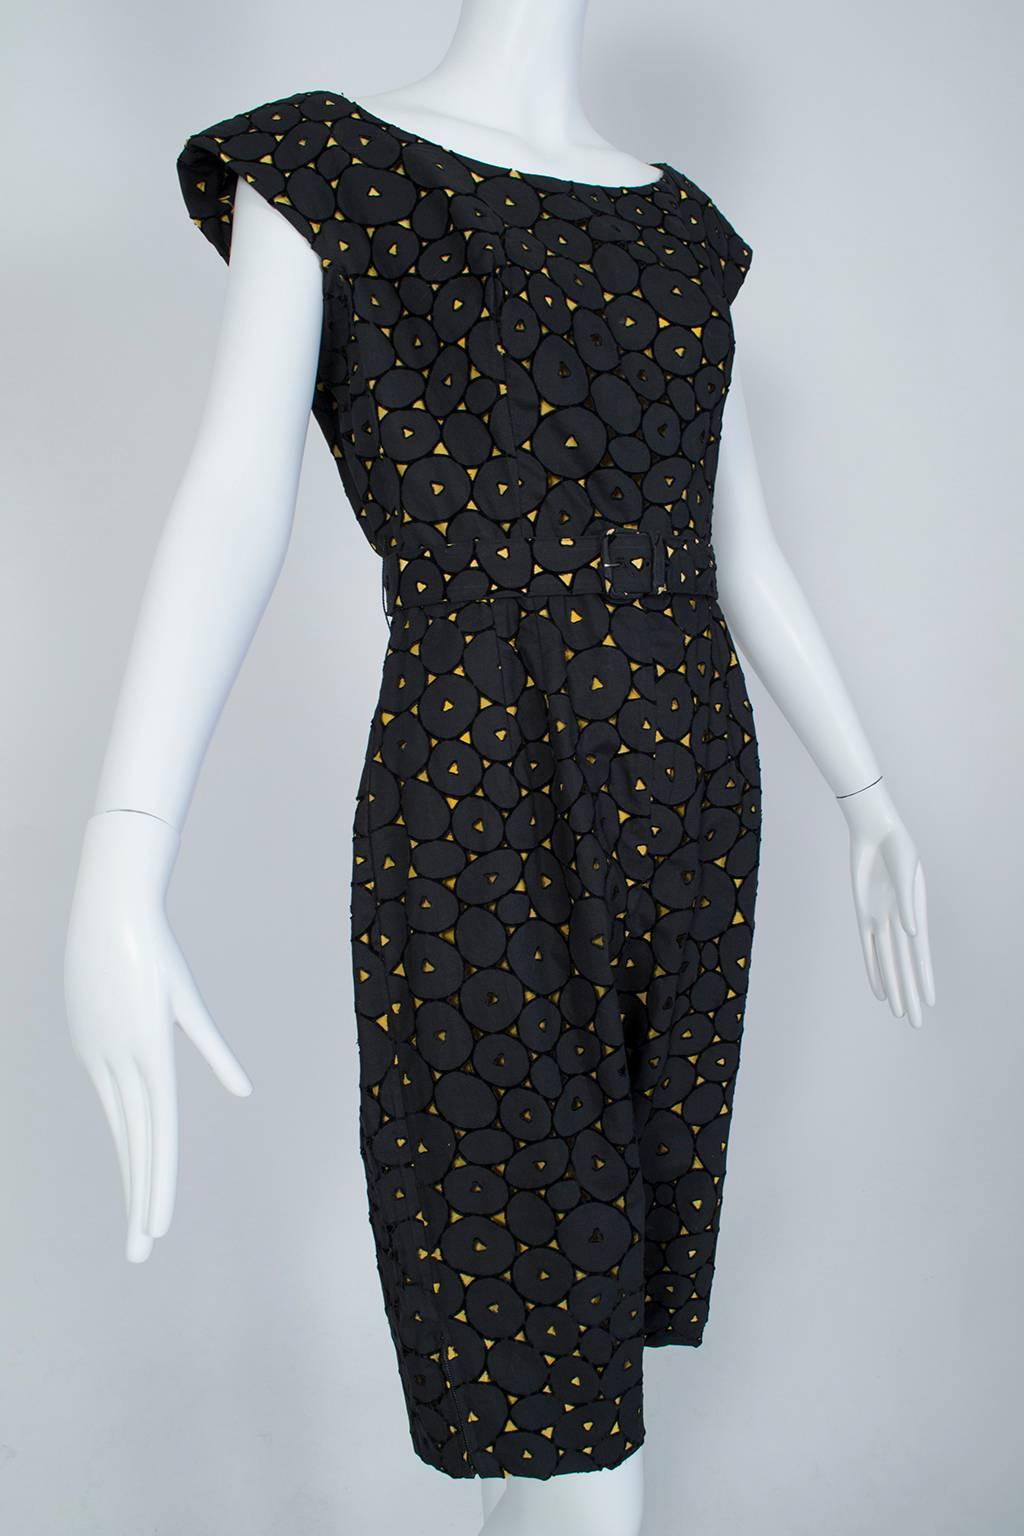 Black and Gold Eyelet Shorts Romper with Sheer Hostess Overskirt - Medium, 1950s 2